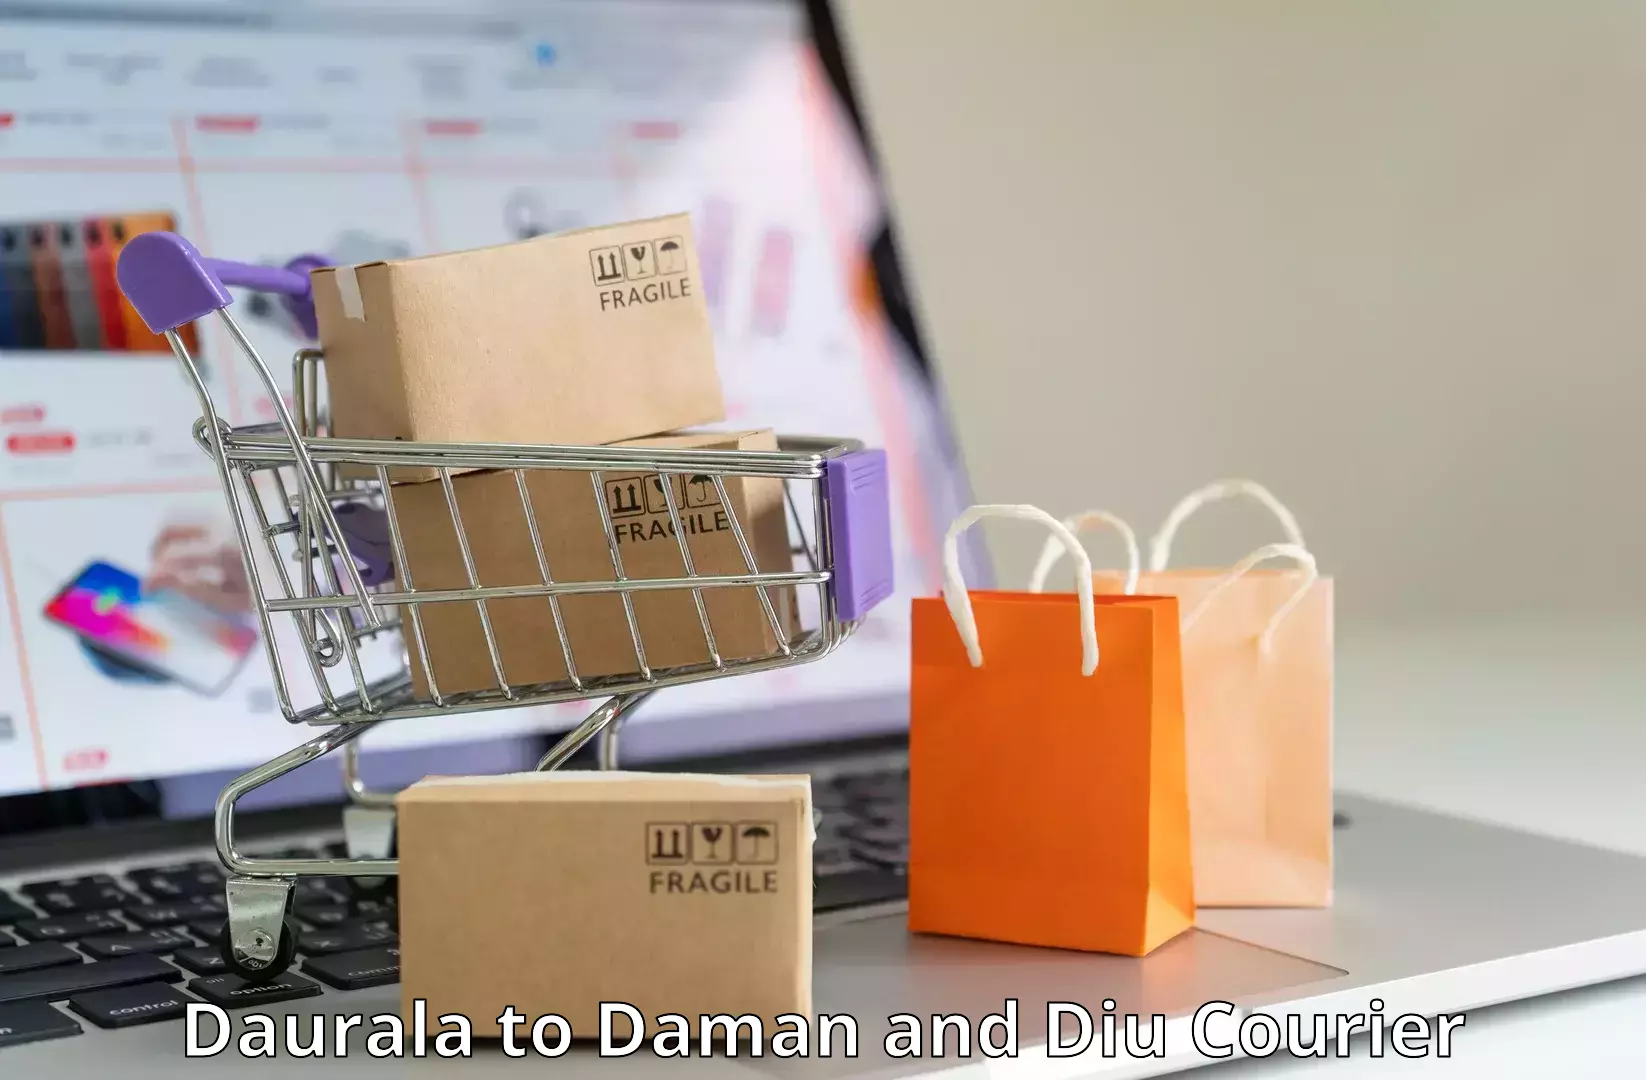 Advanced courier platforms Daurala to Diu